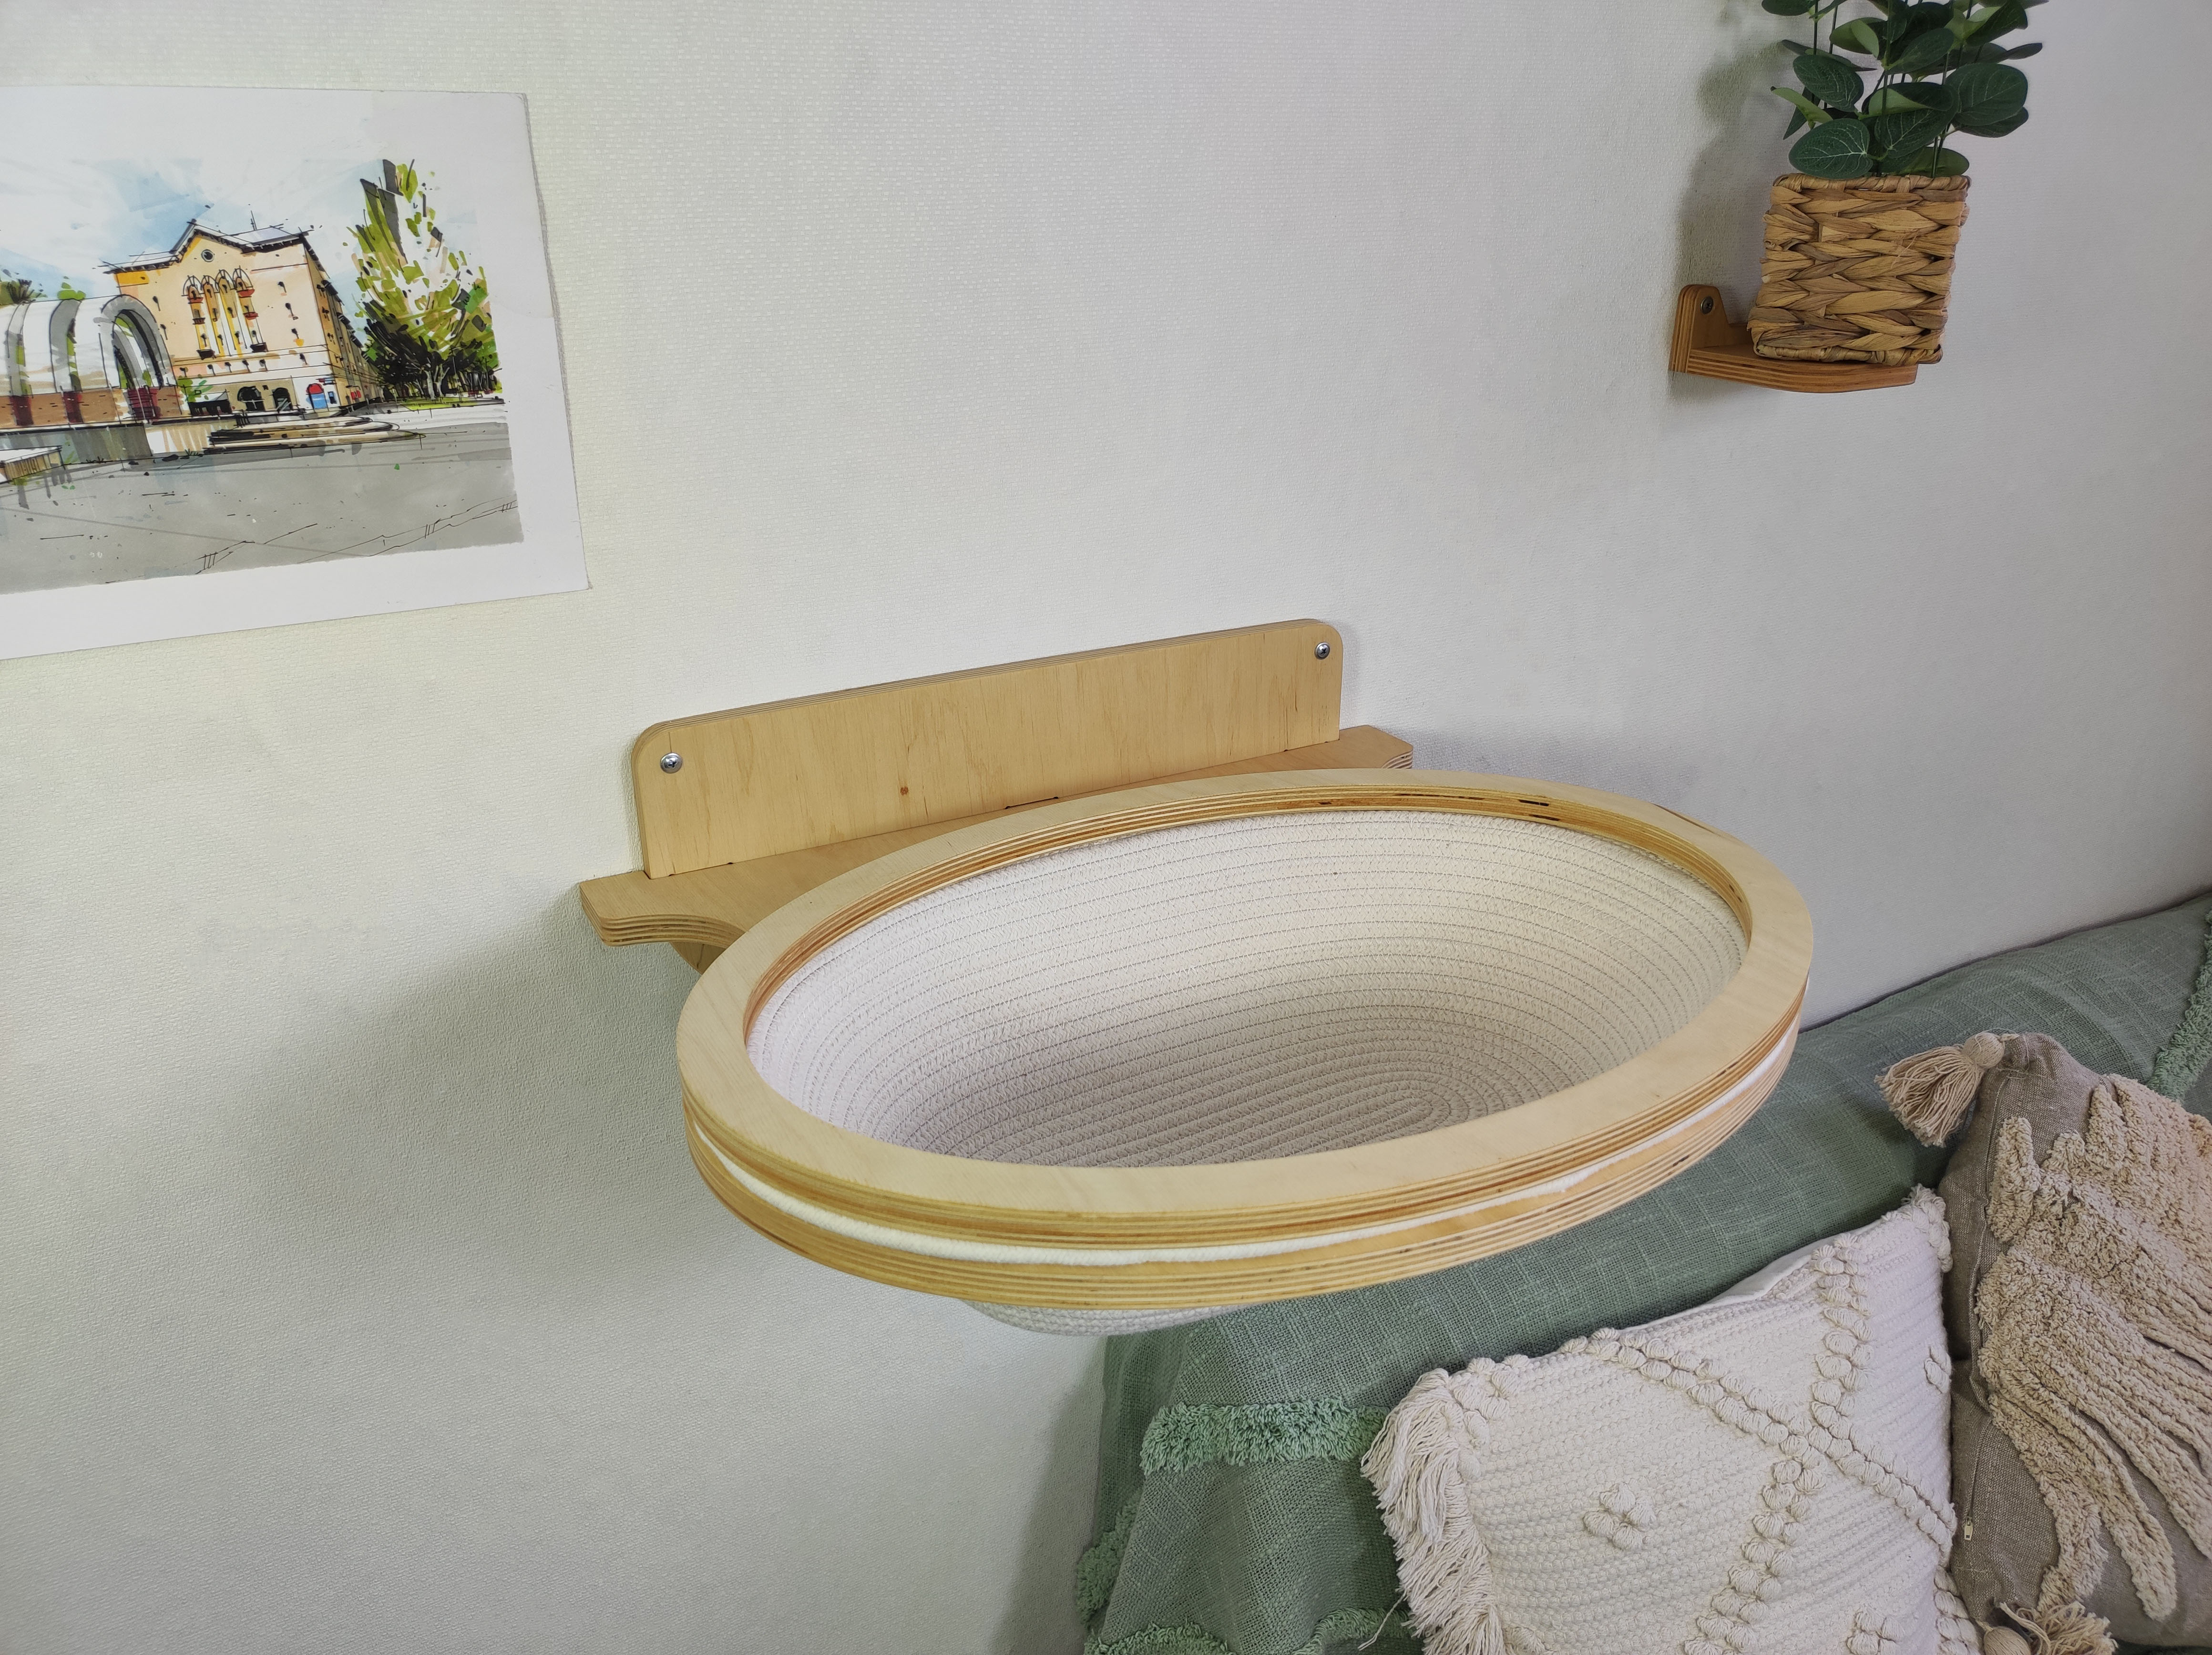 Wall-mounted light wood cat basket